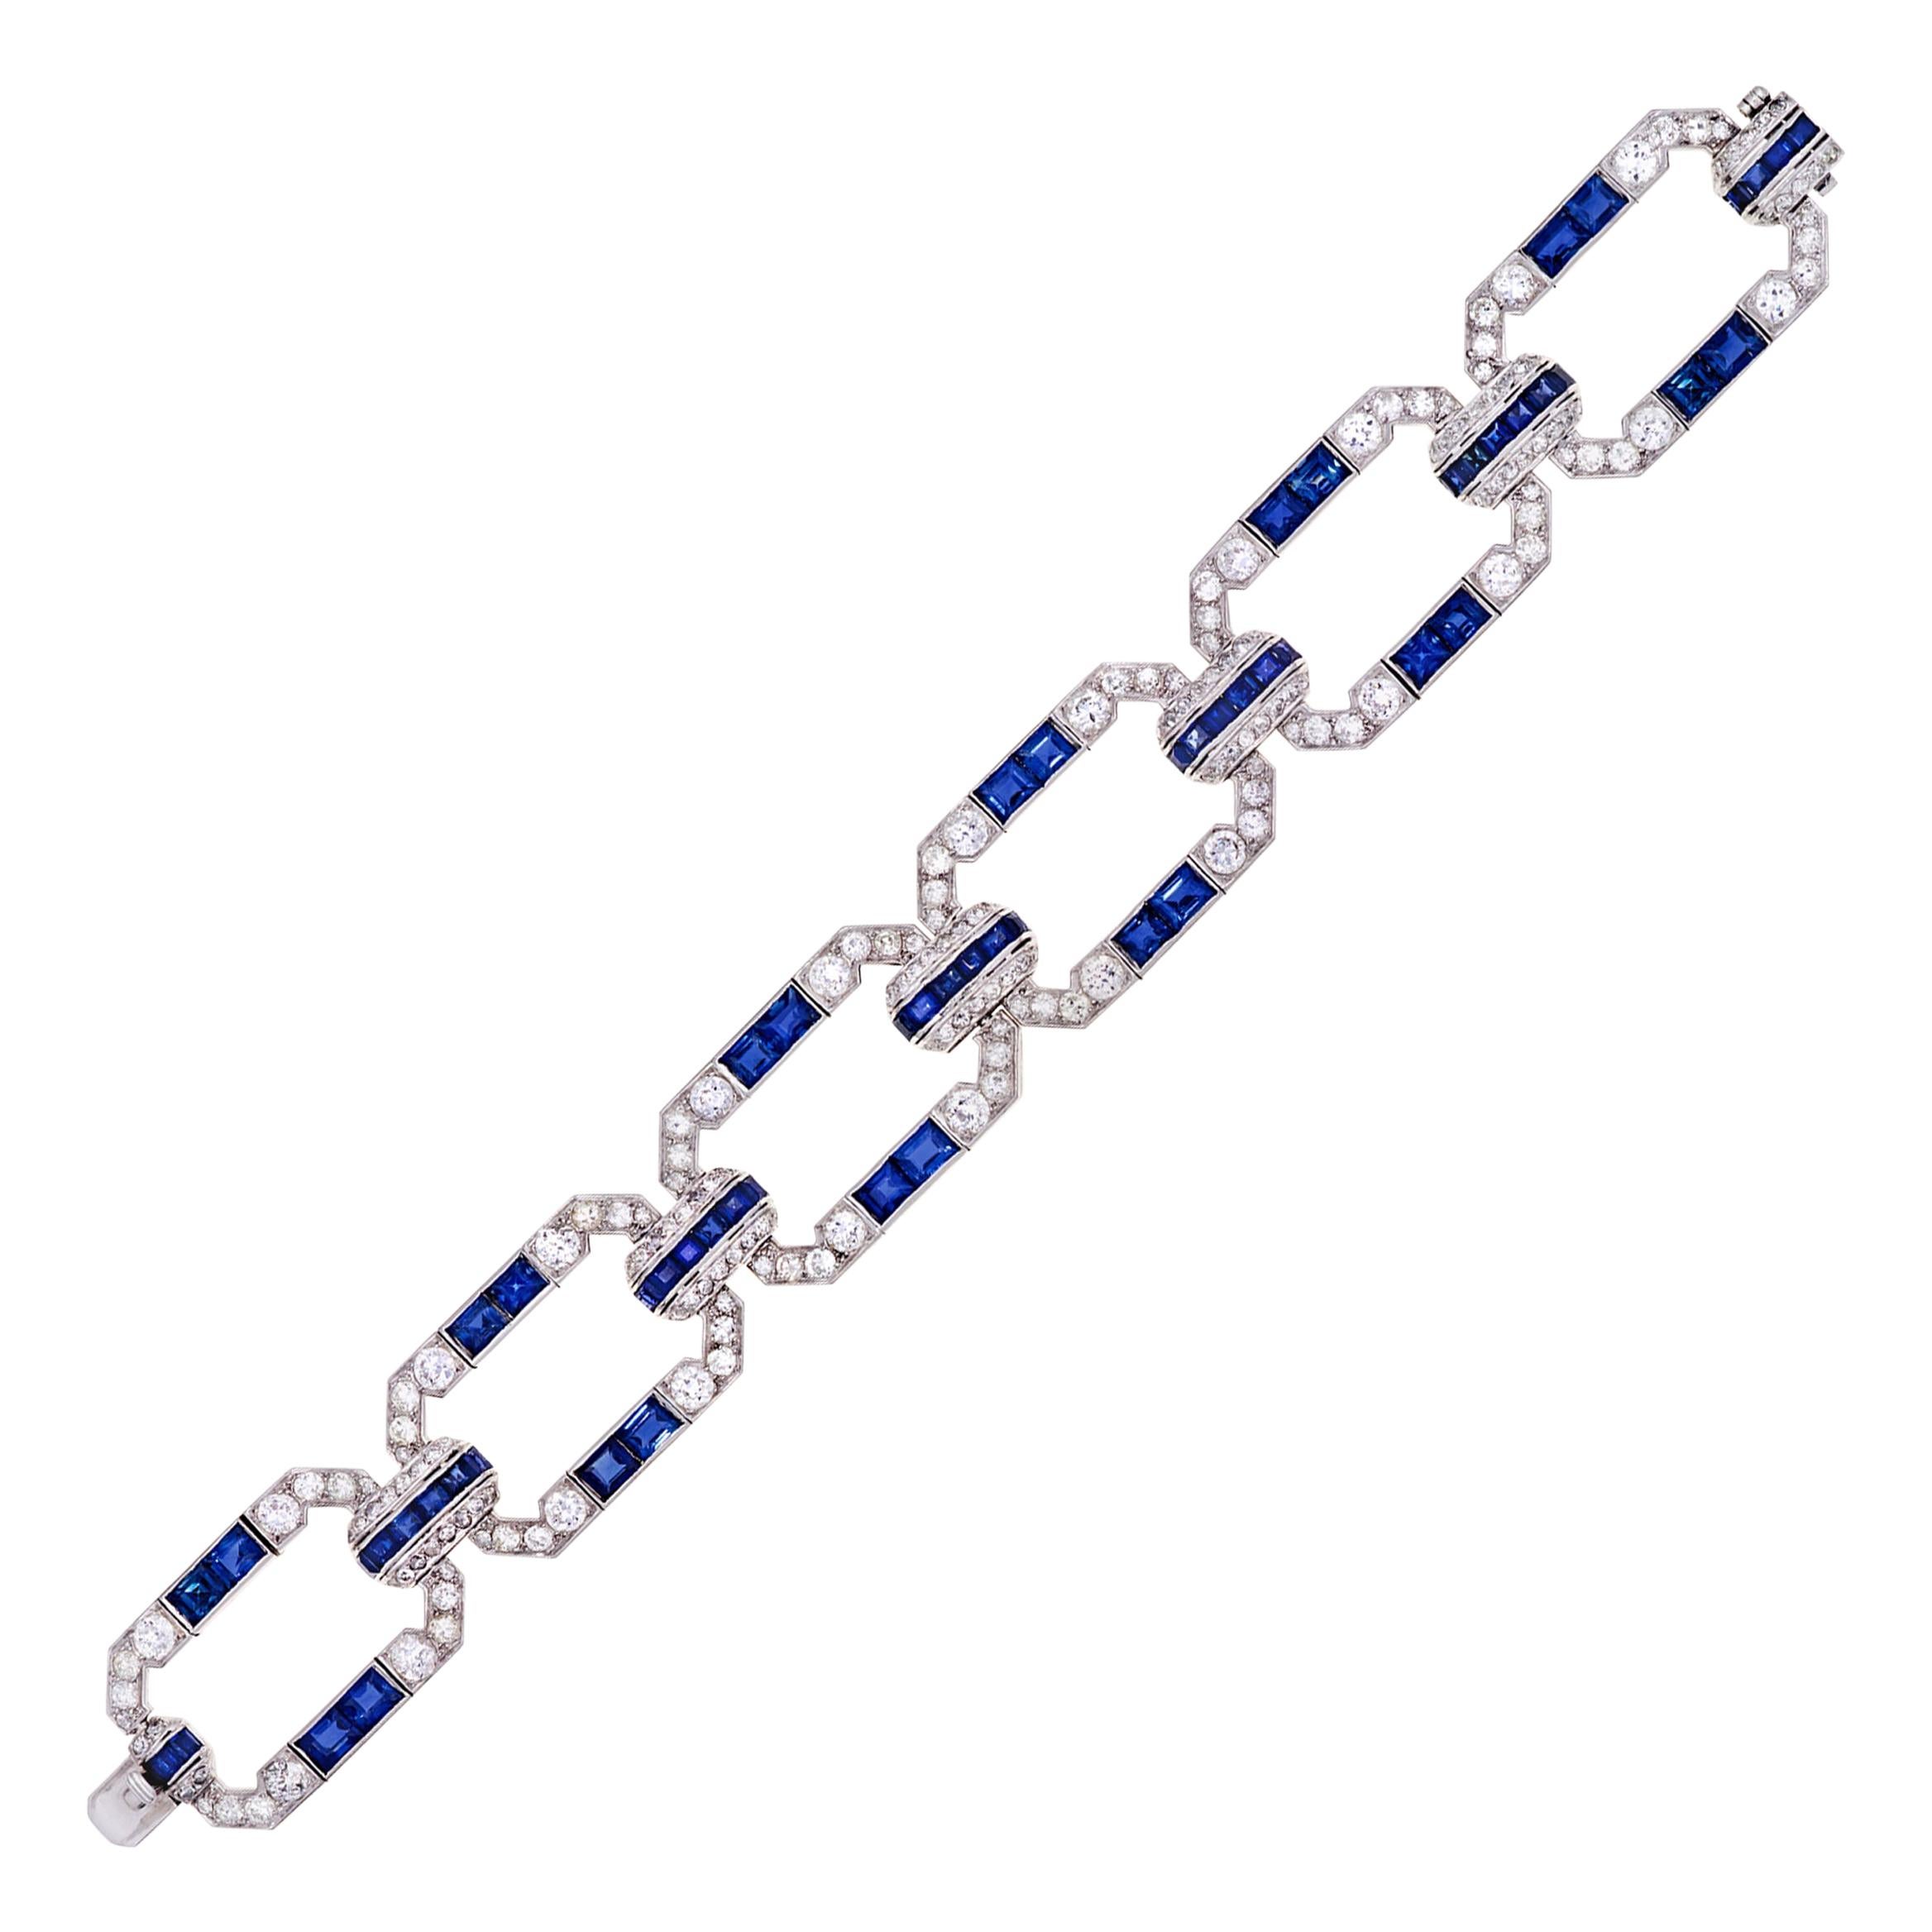 GIA Certified 19.0 Carat NO HEAT Blue Sapphire and Diamond Bracelet in Platinum